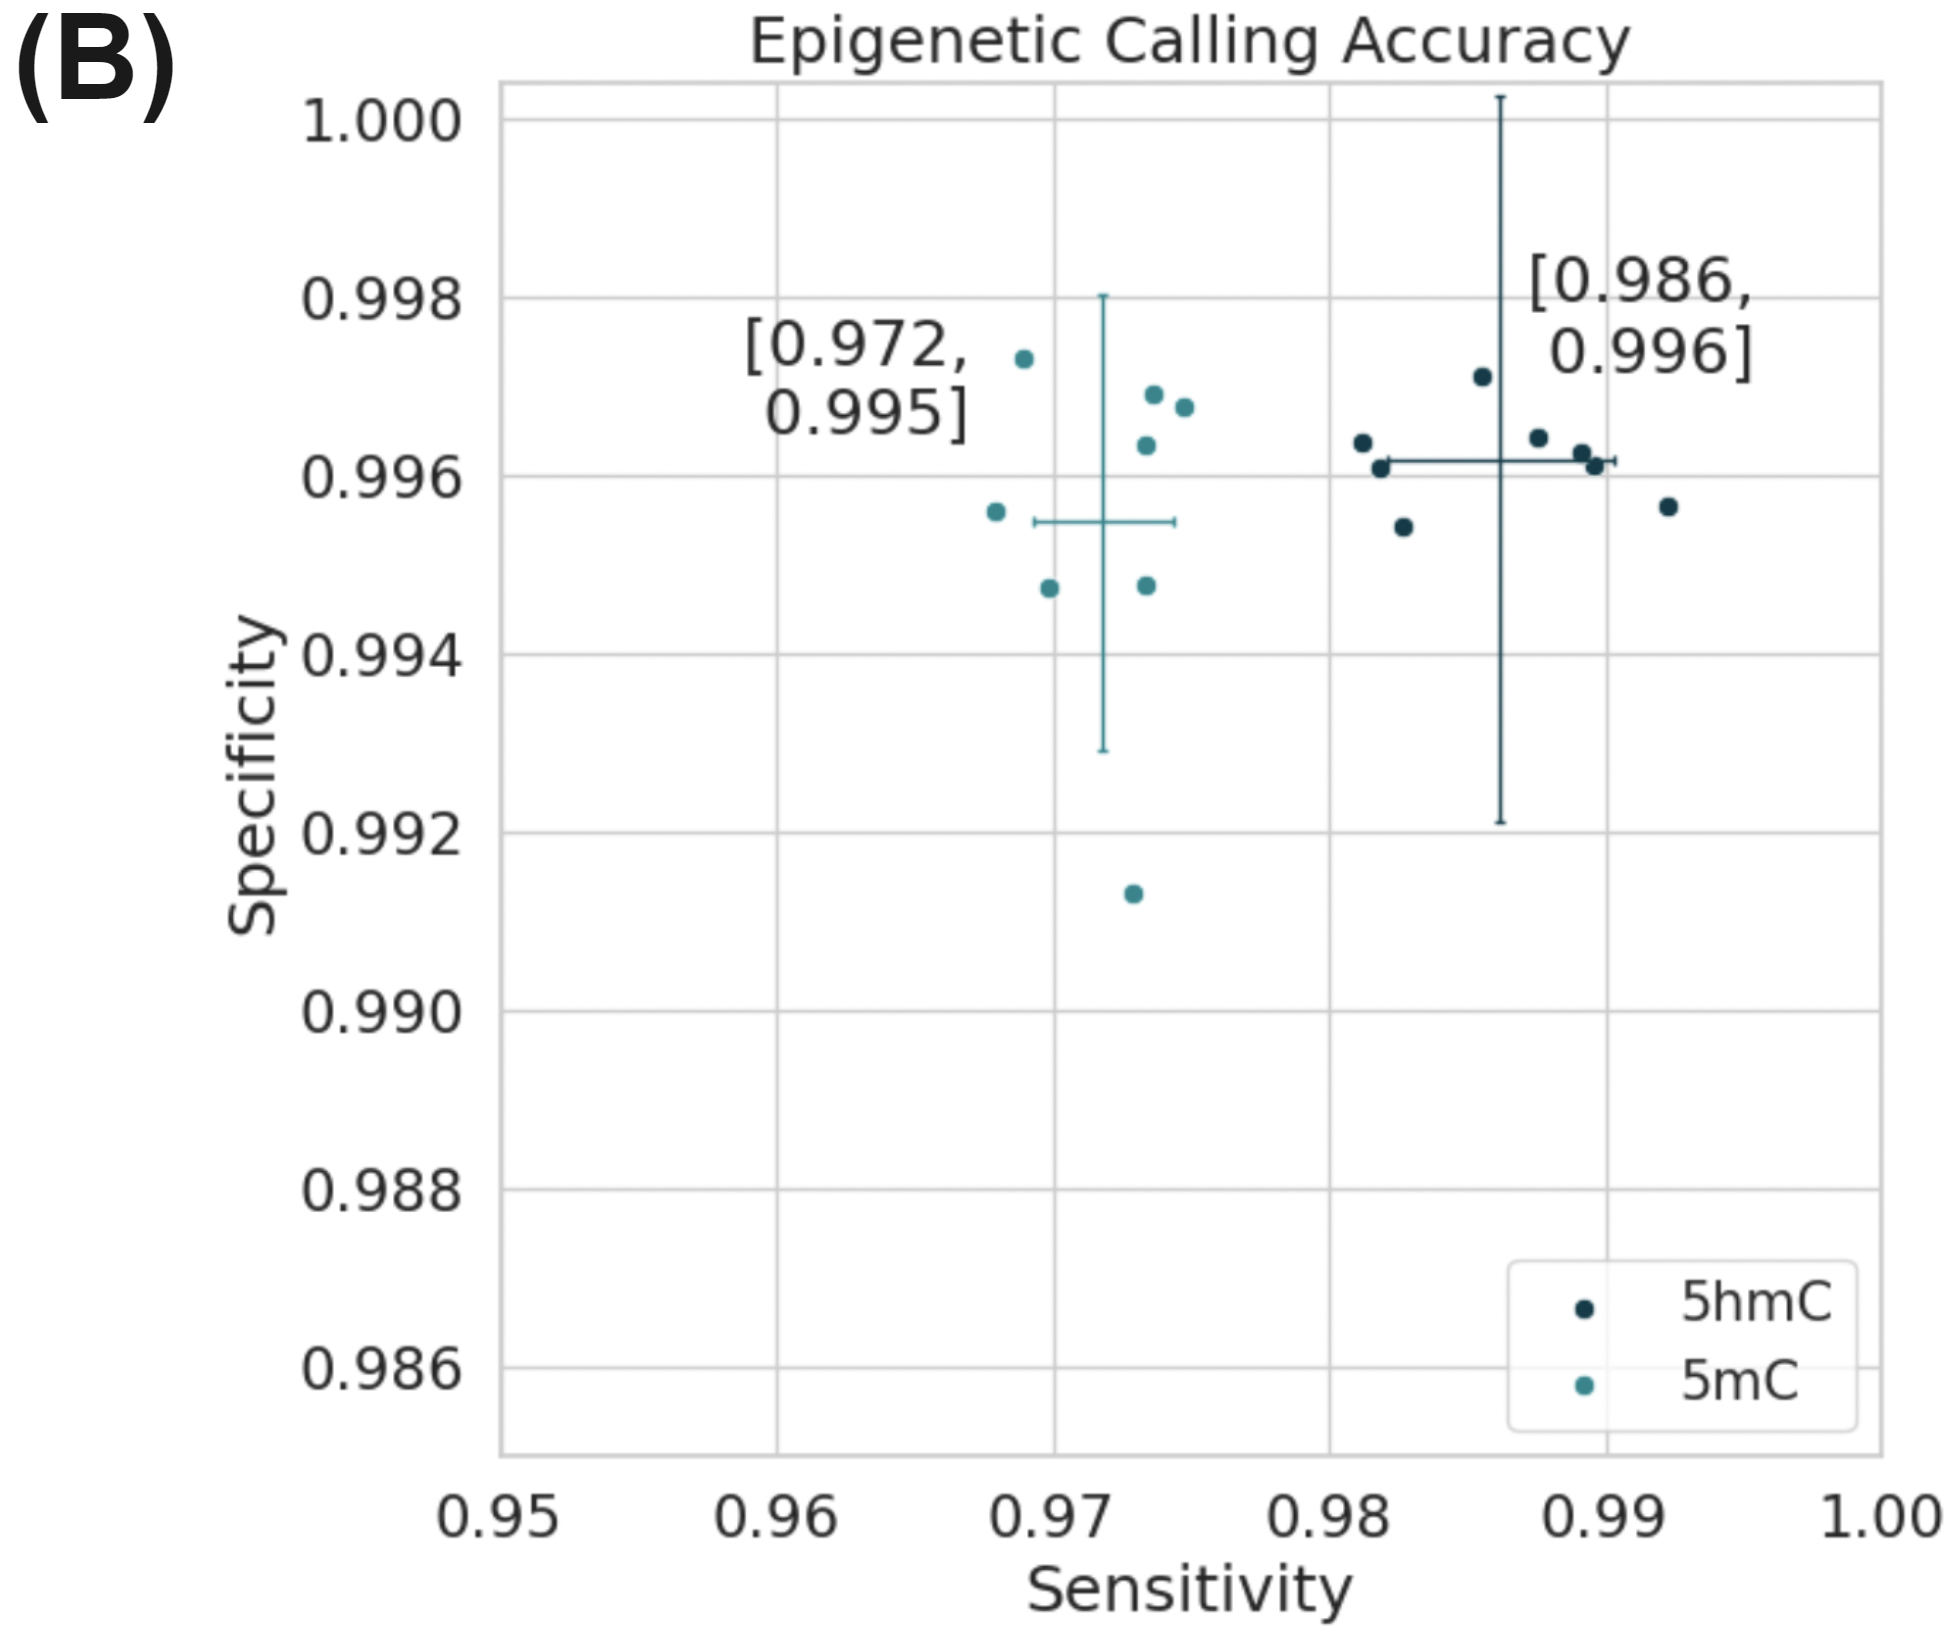 Epigenetic calling accuracy for duet evoC